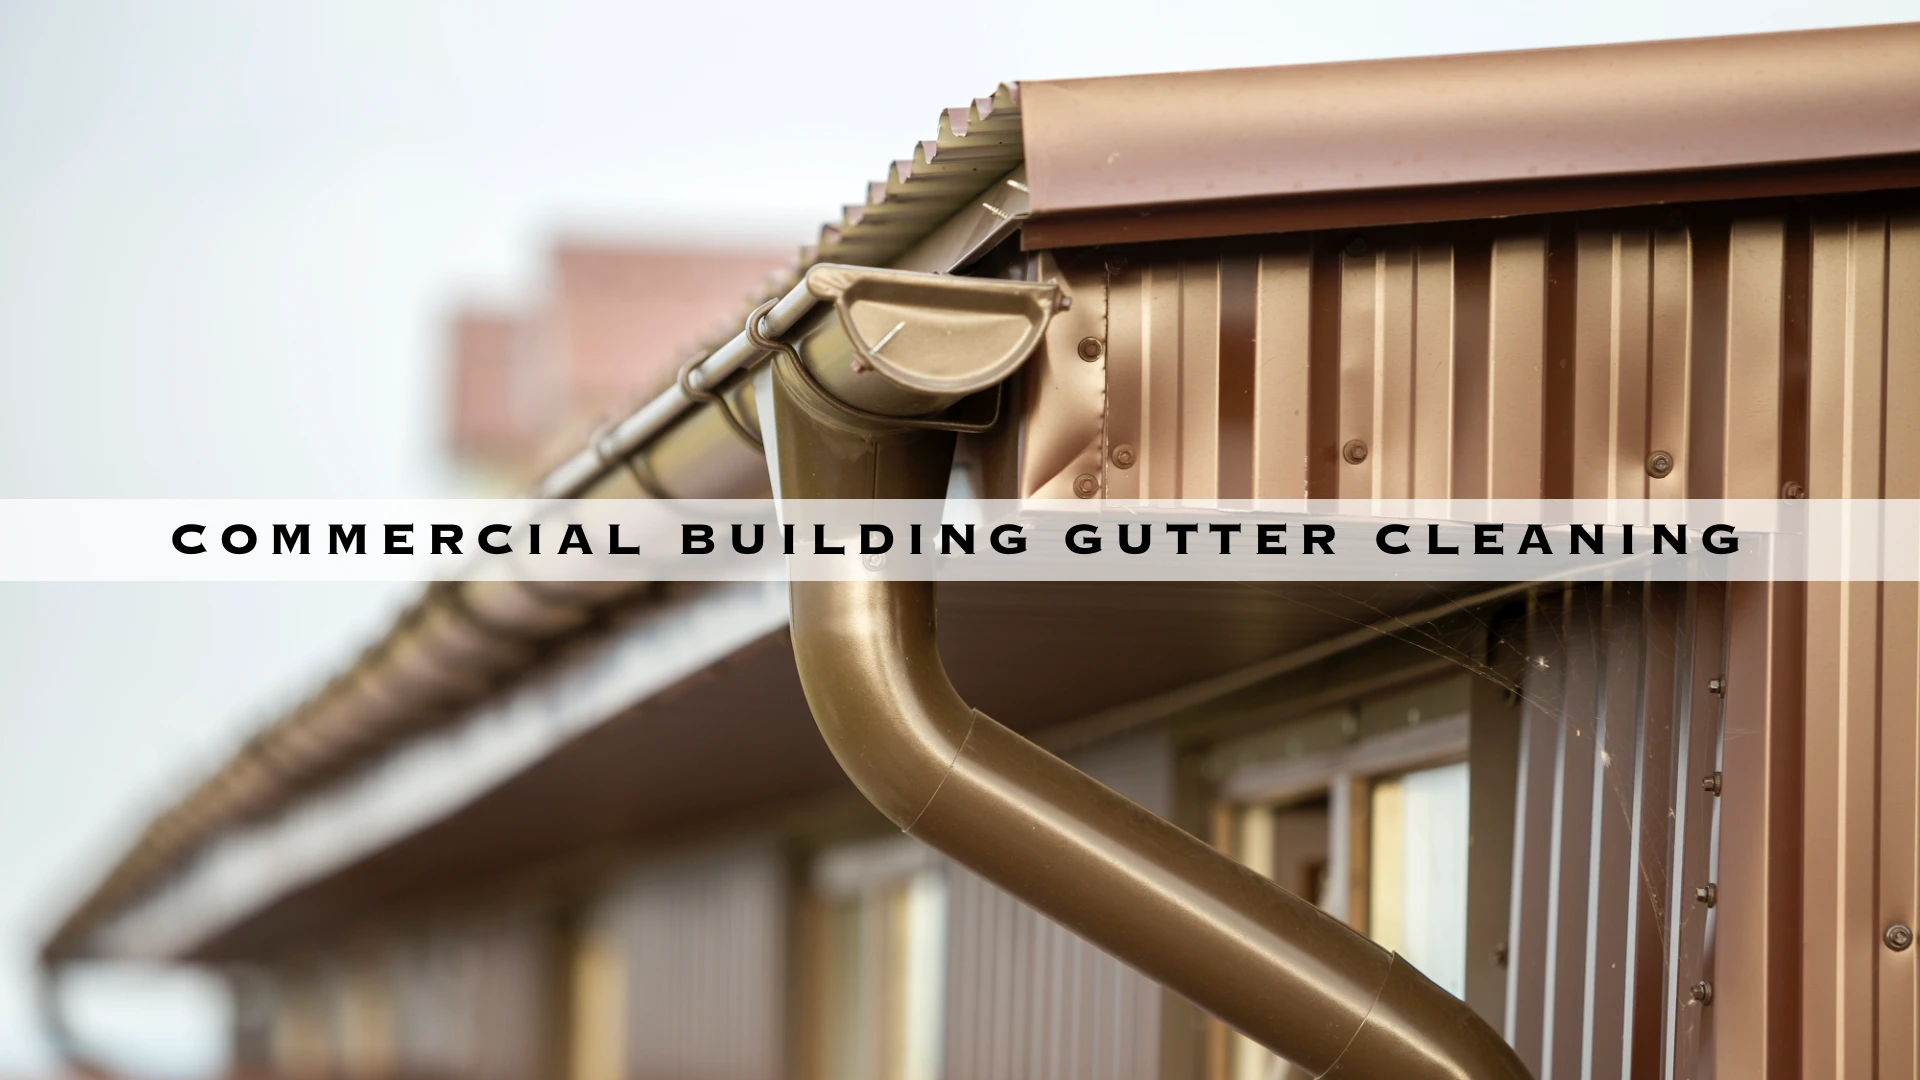 COMMERCIAL BUILDING GUTTER CLEANING - HERO DESKTOP